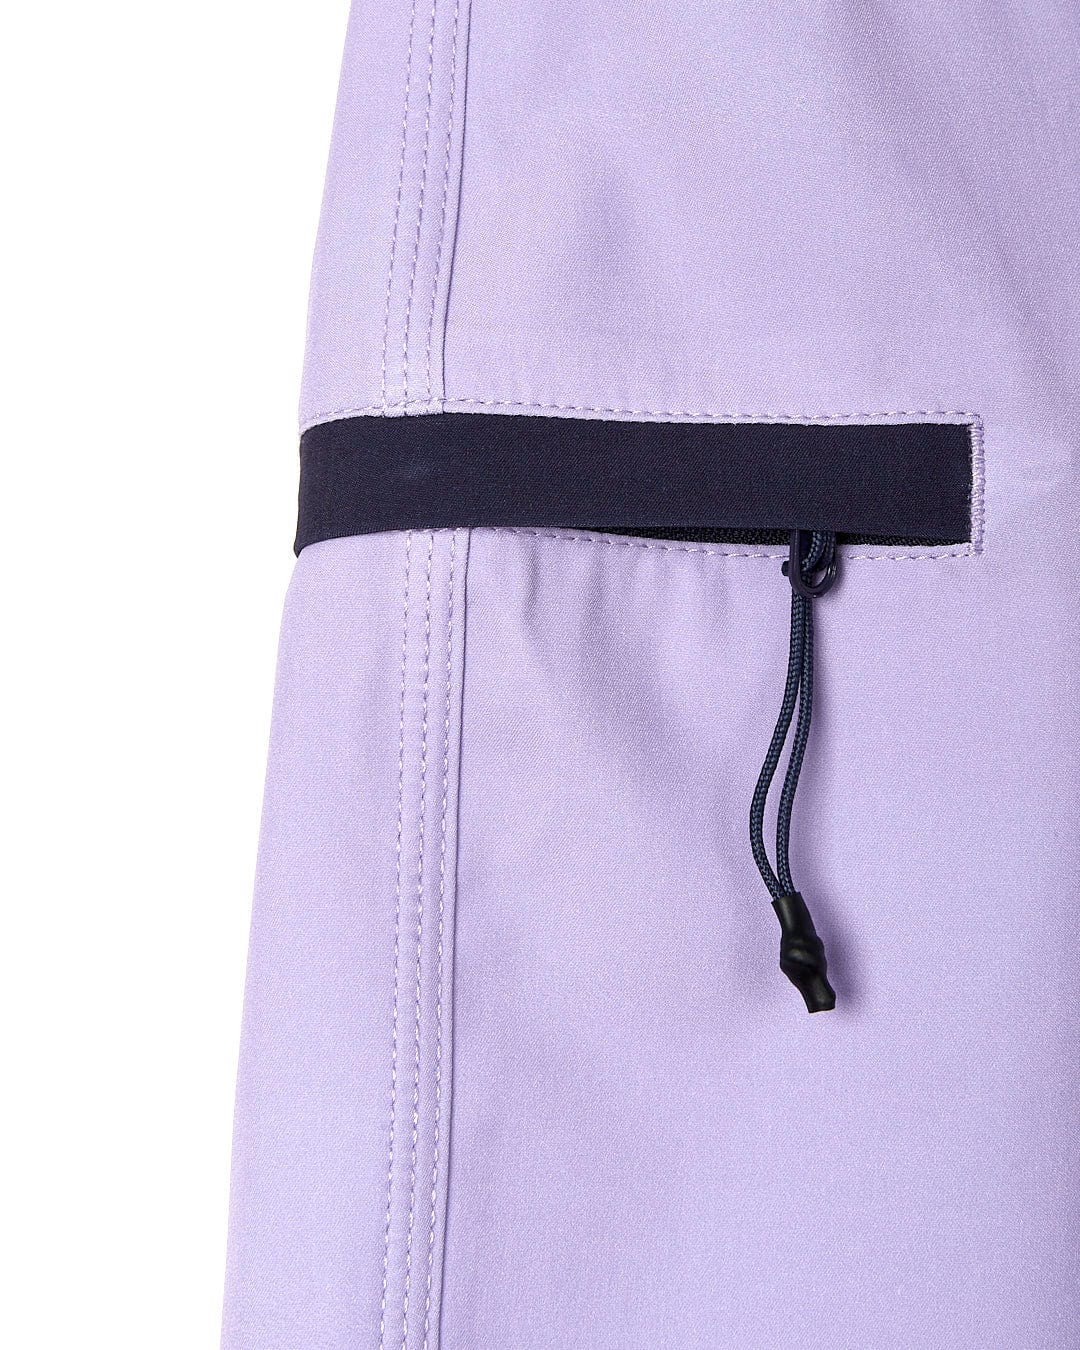 A close up of the pocket of a Saltrock Shoreline - Womens Boardshort - Light Purple.